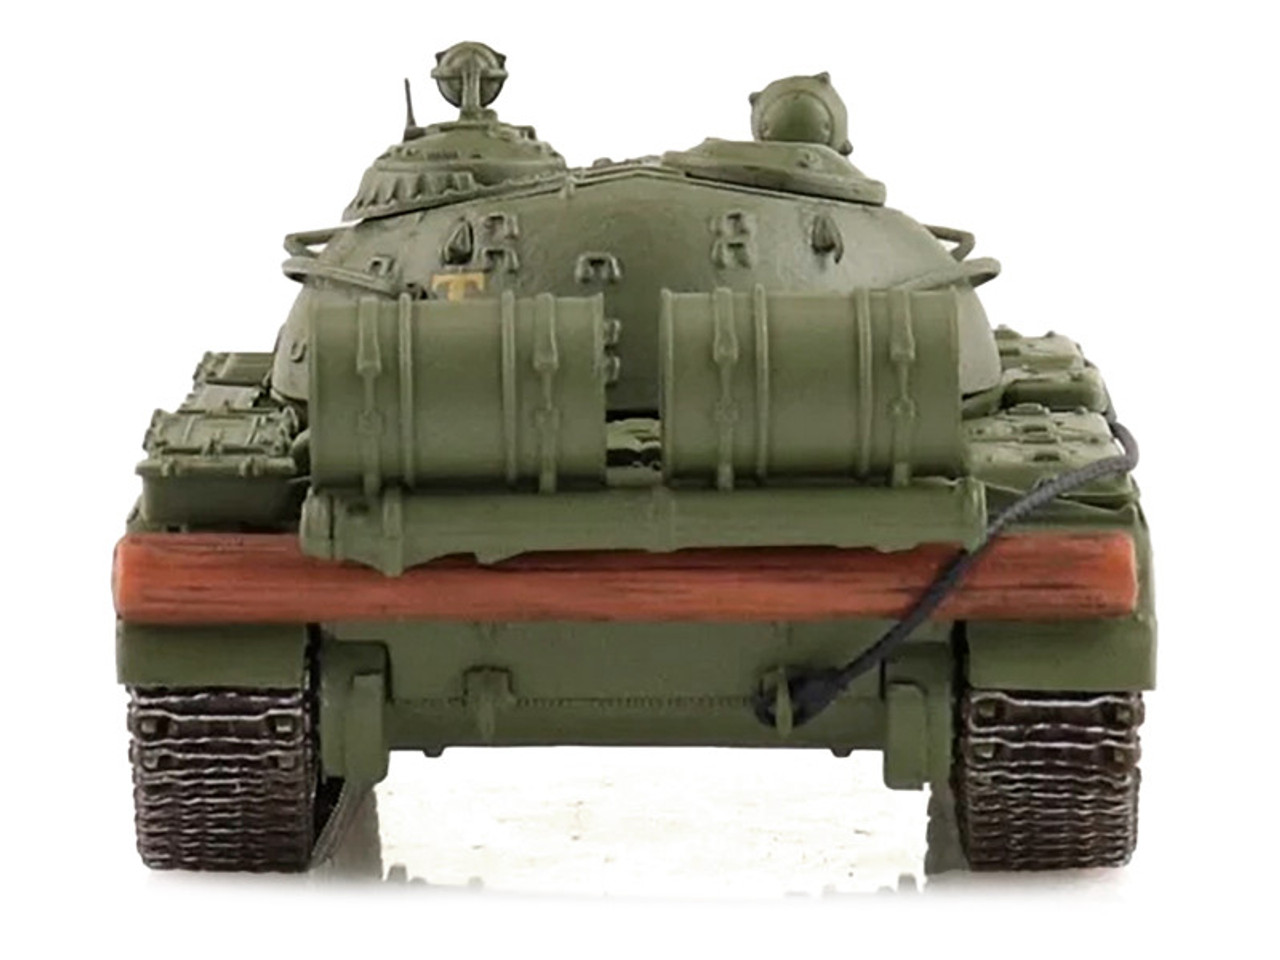 KhPZ T-54B Medium Tank #815 "Hanoi" (April 1975) Soviet Army 1/72 Diecast Model by Hobby Master